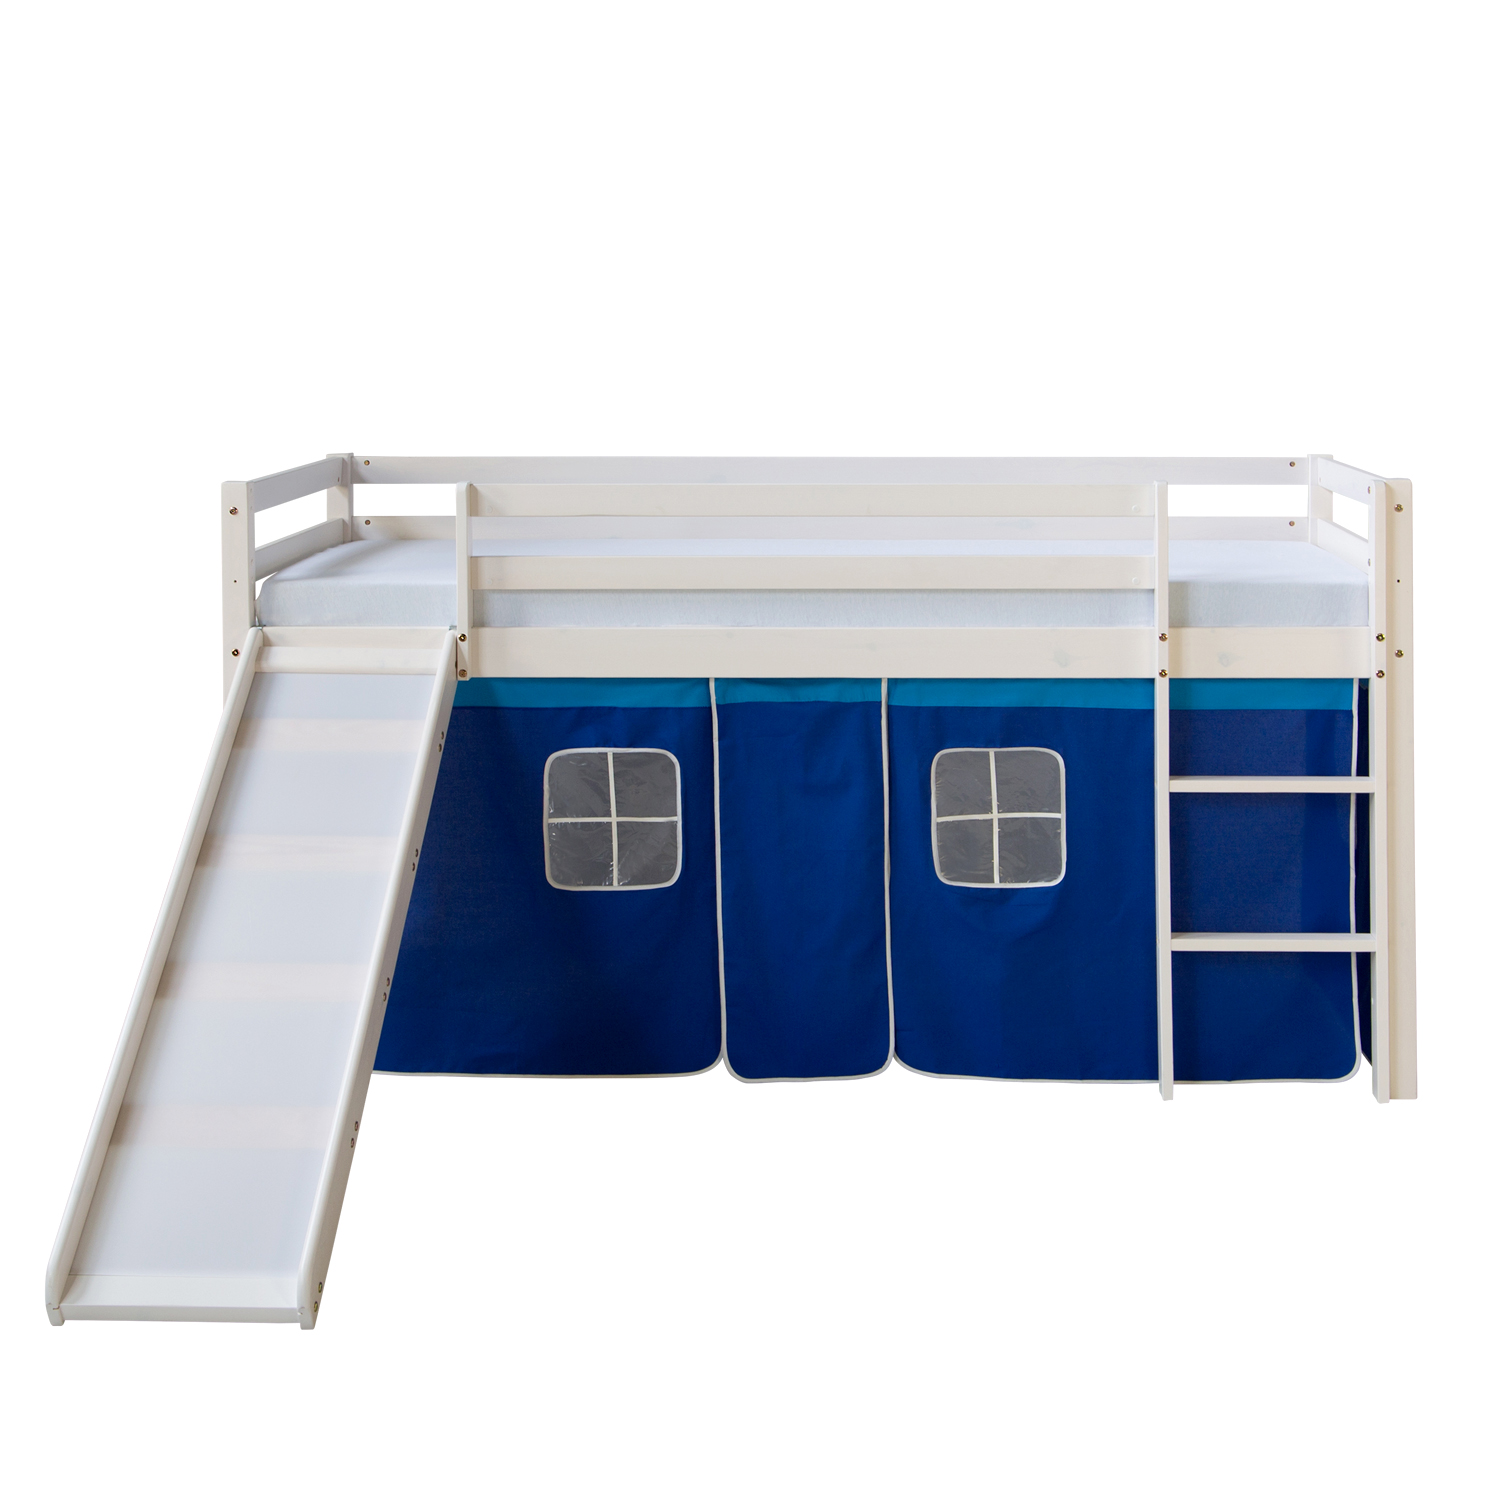 Children bunk bed loft cabin bed solid pine white blue curtain slide